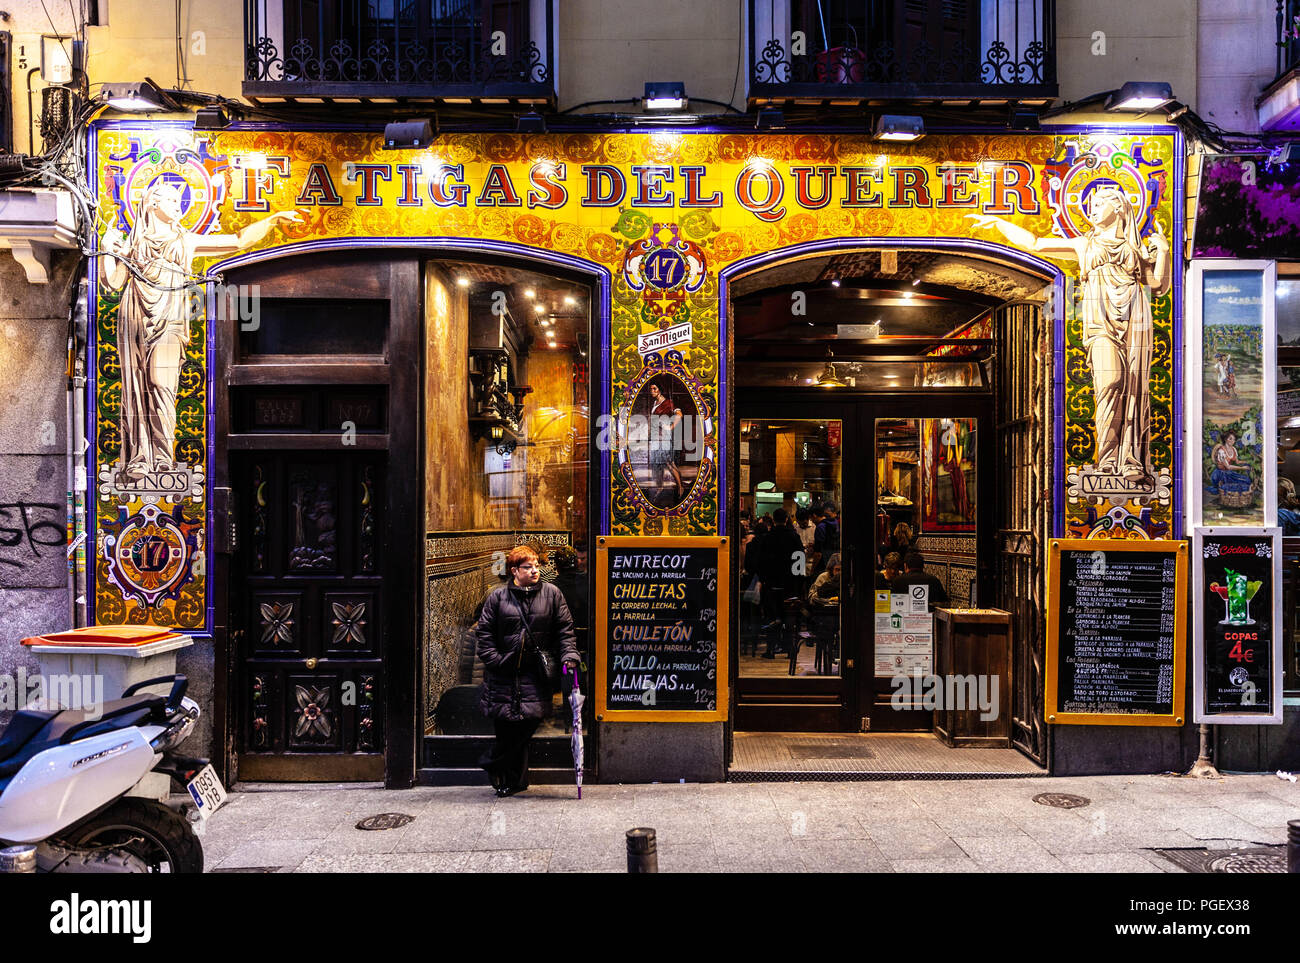 Fatigas del Querer restaurant front view, Calle de la Cruz, Huertas, Madrid, Spain. Stock Photo